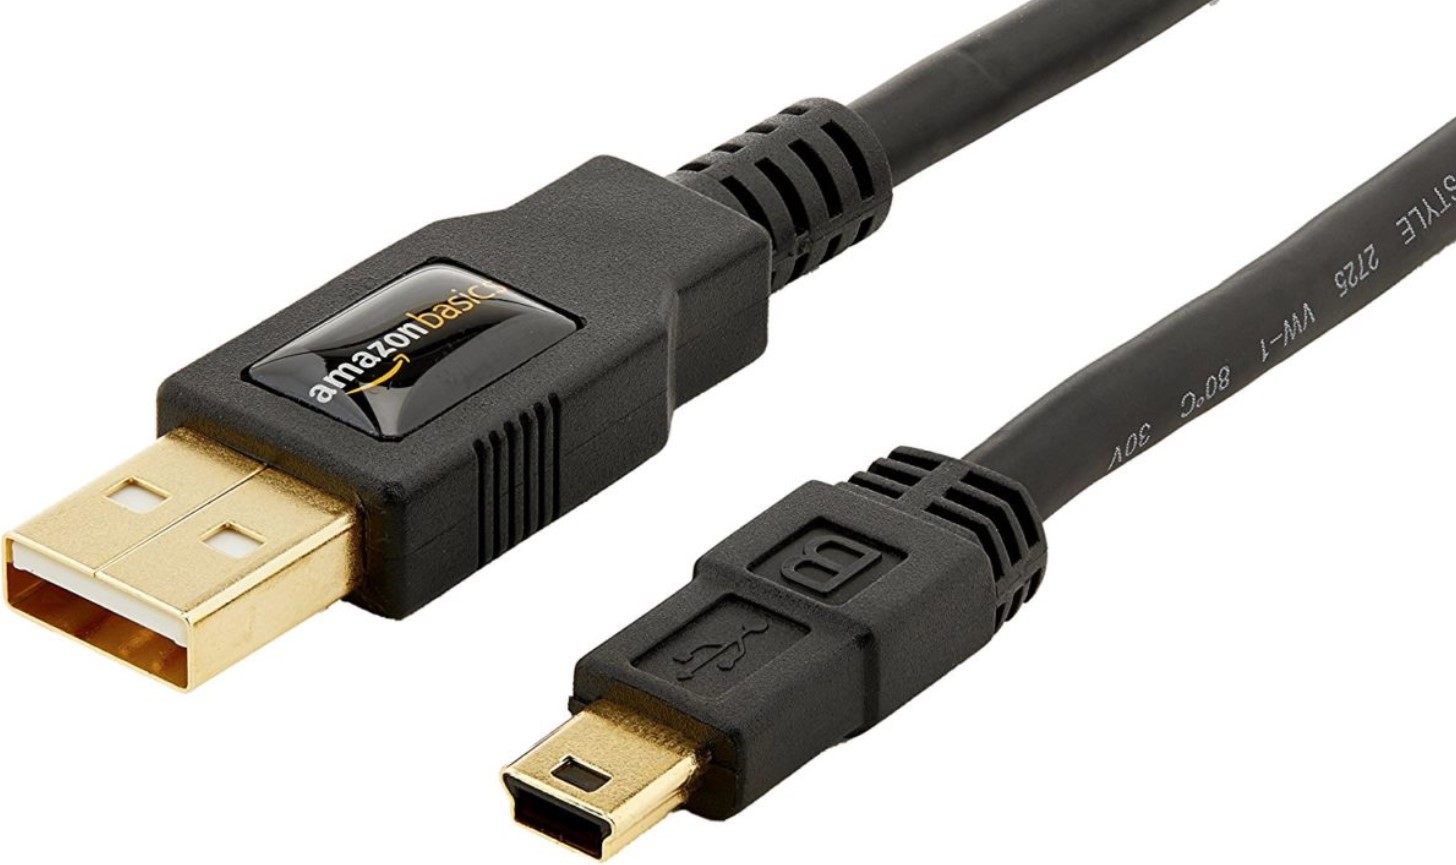 MINI-B USB CABLE